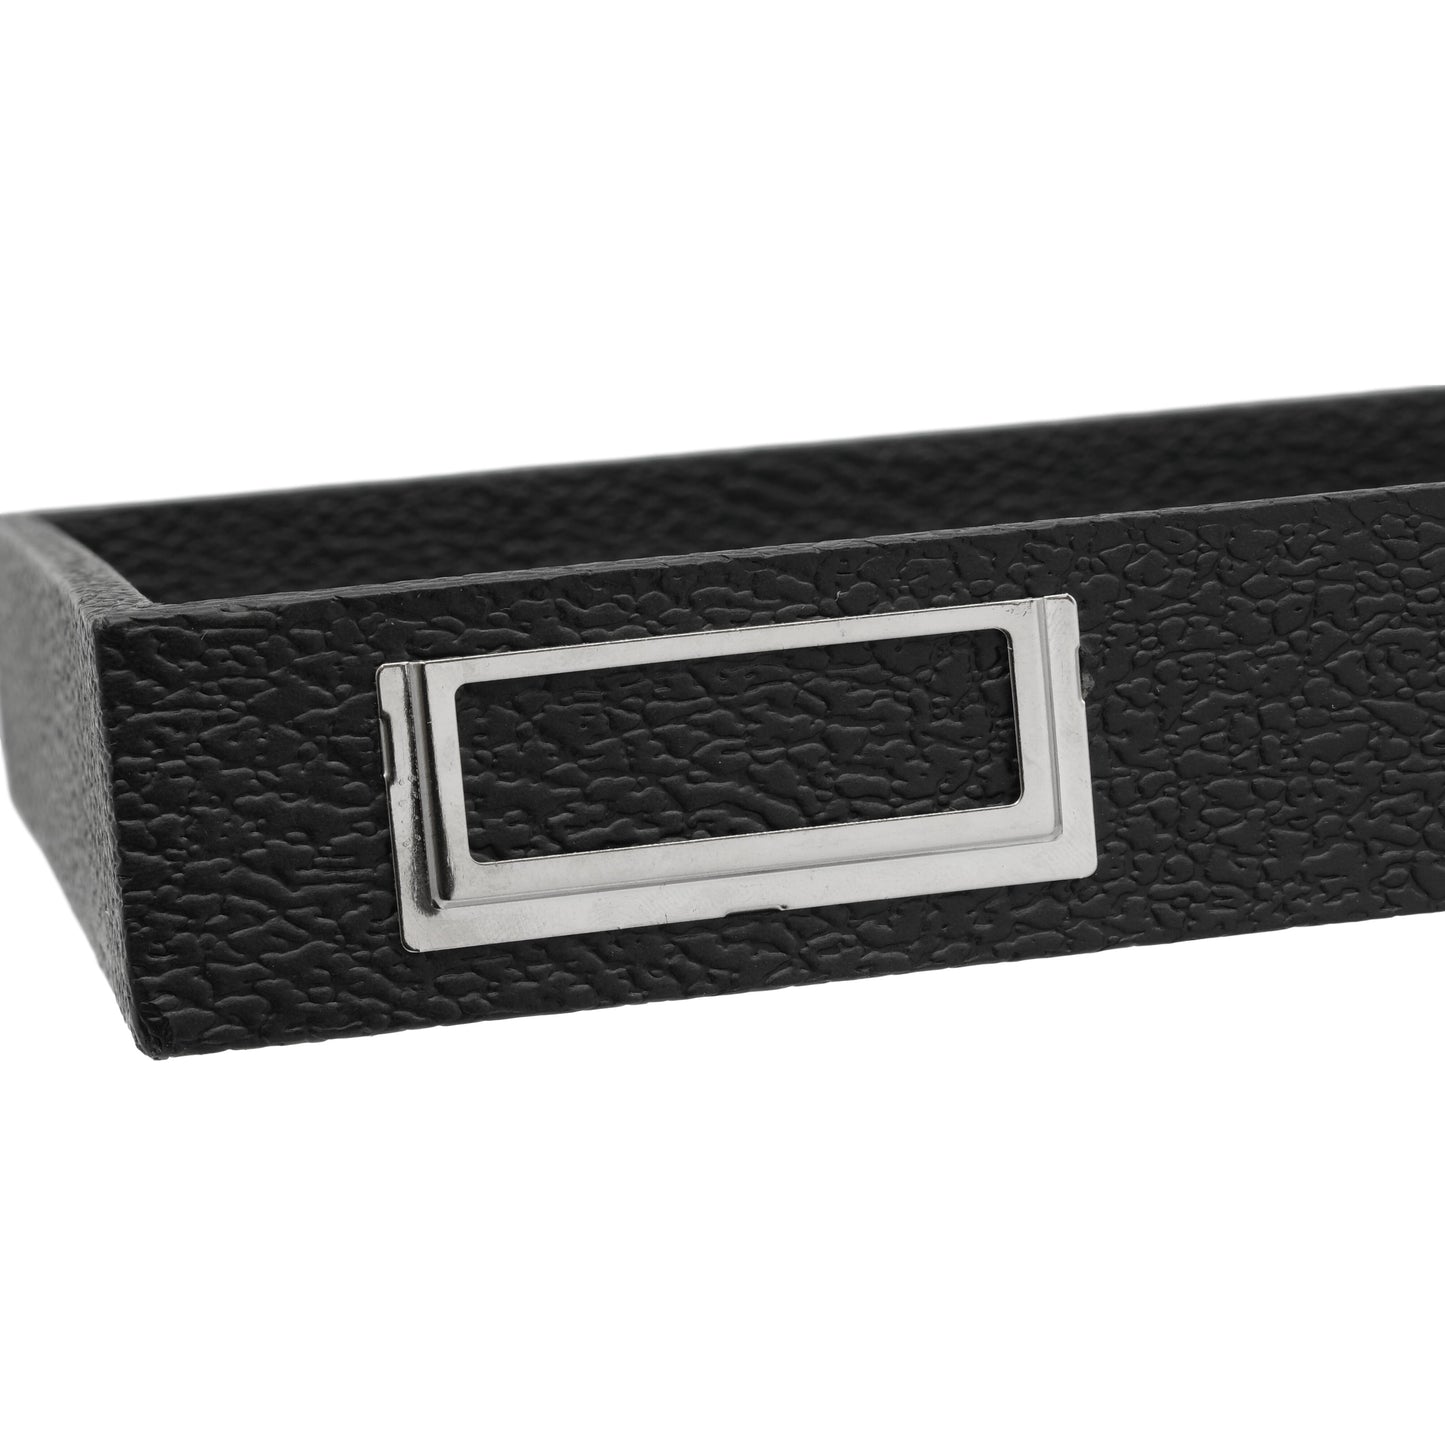 5 Drawer Jewelry Storage Case & Black Foam Ring Display Tray Inserts Kit 6 Pcs